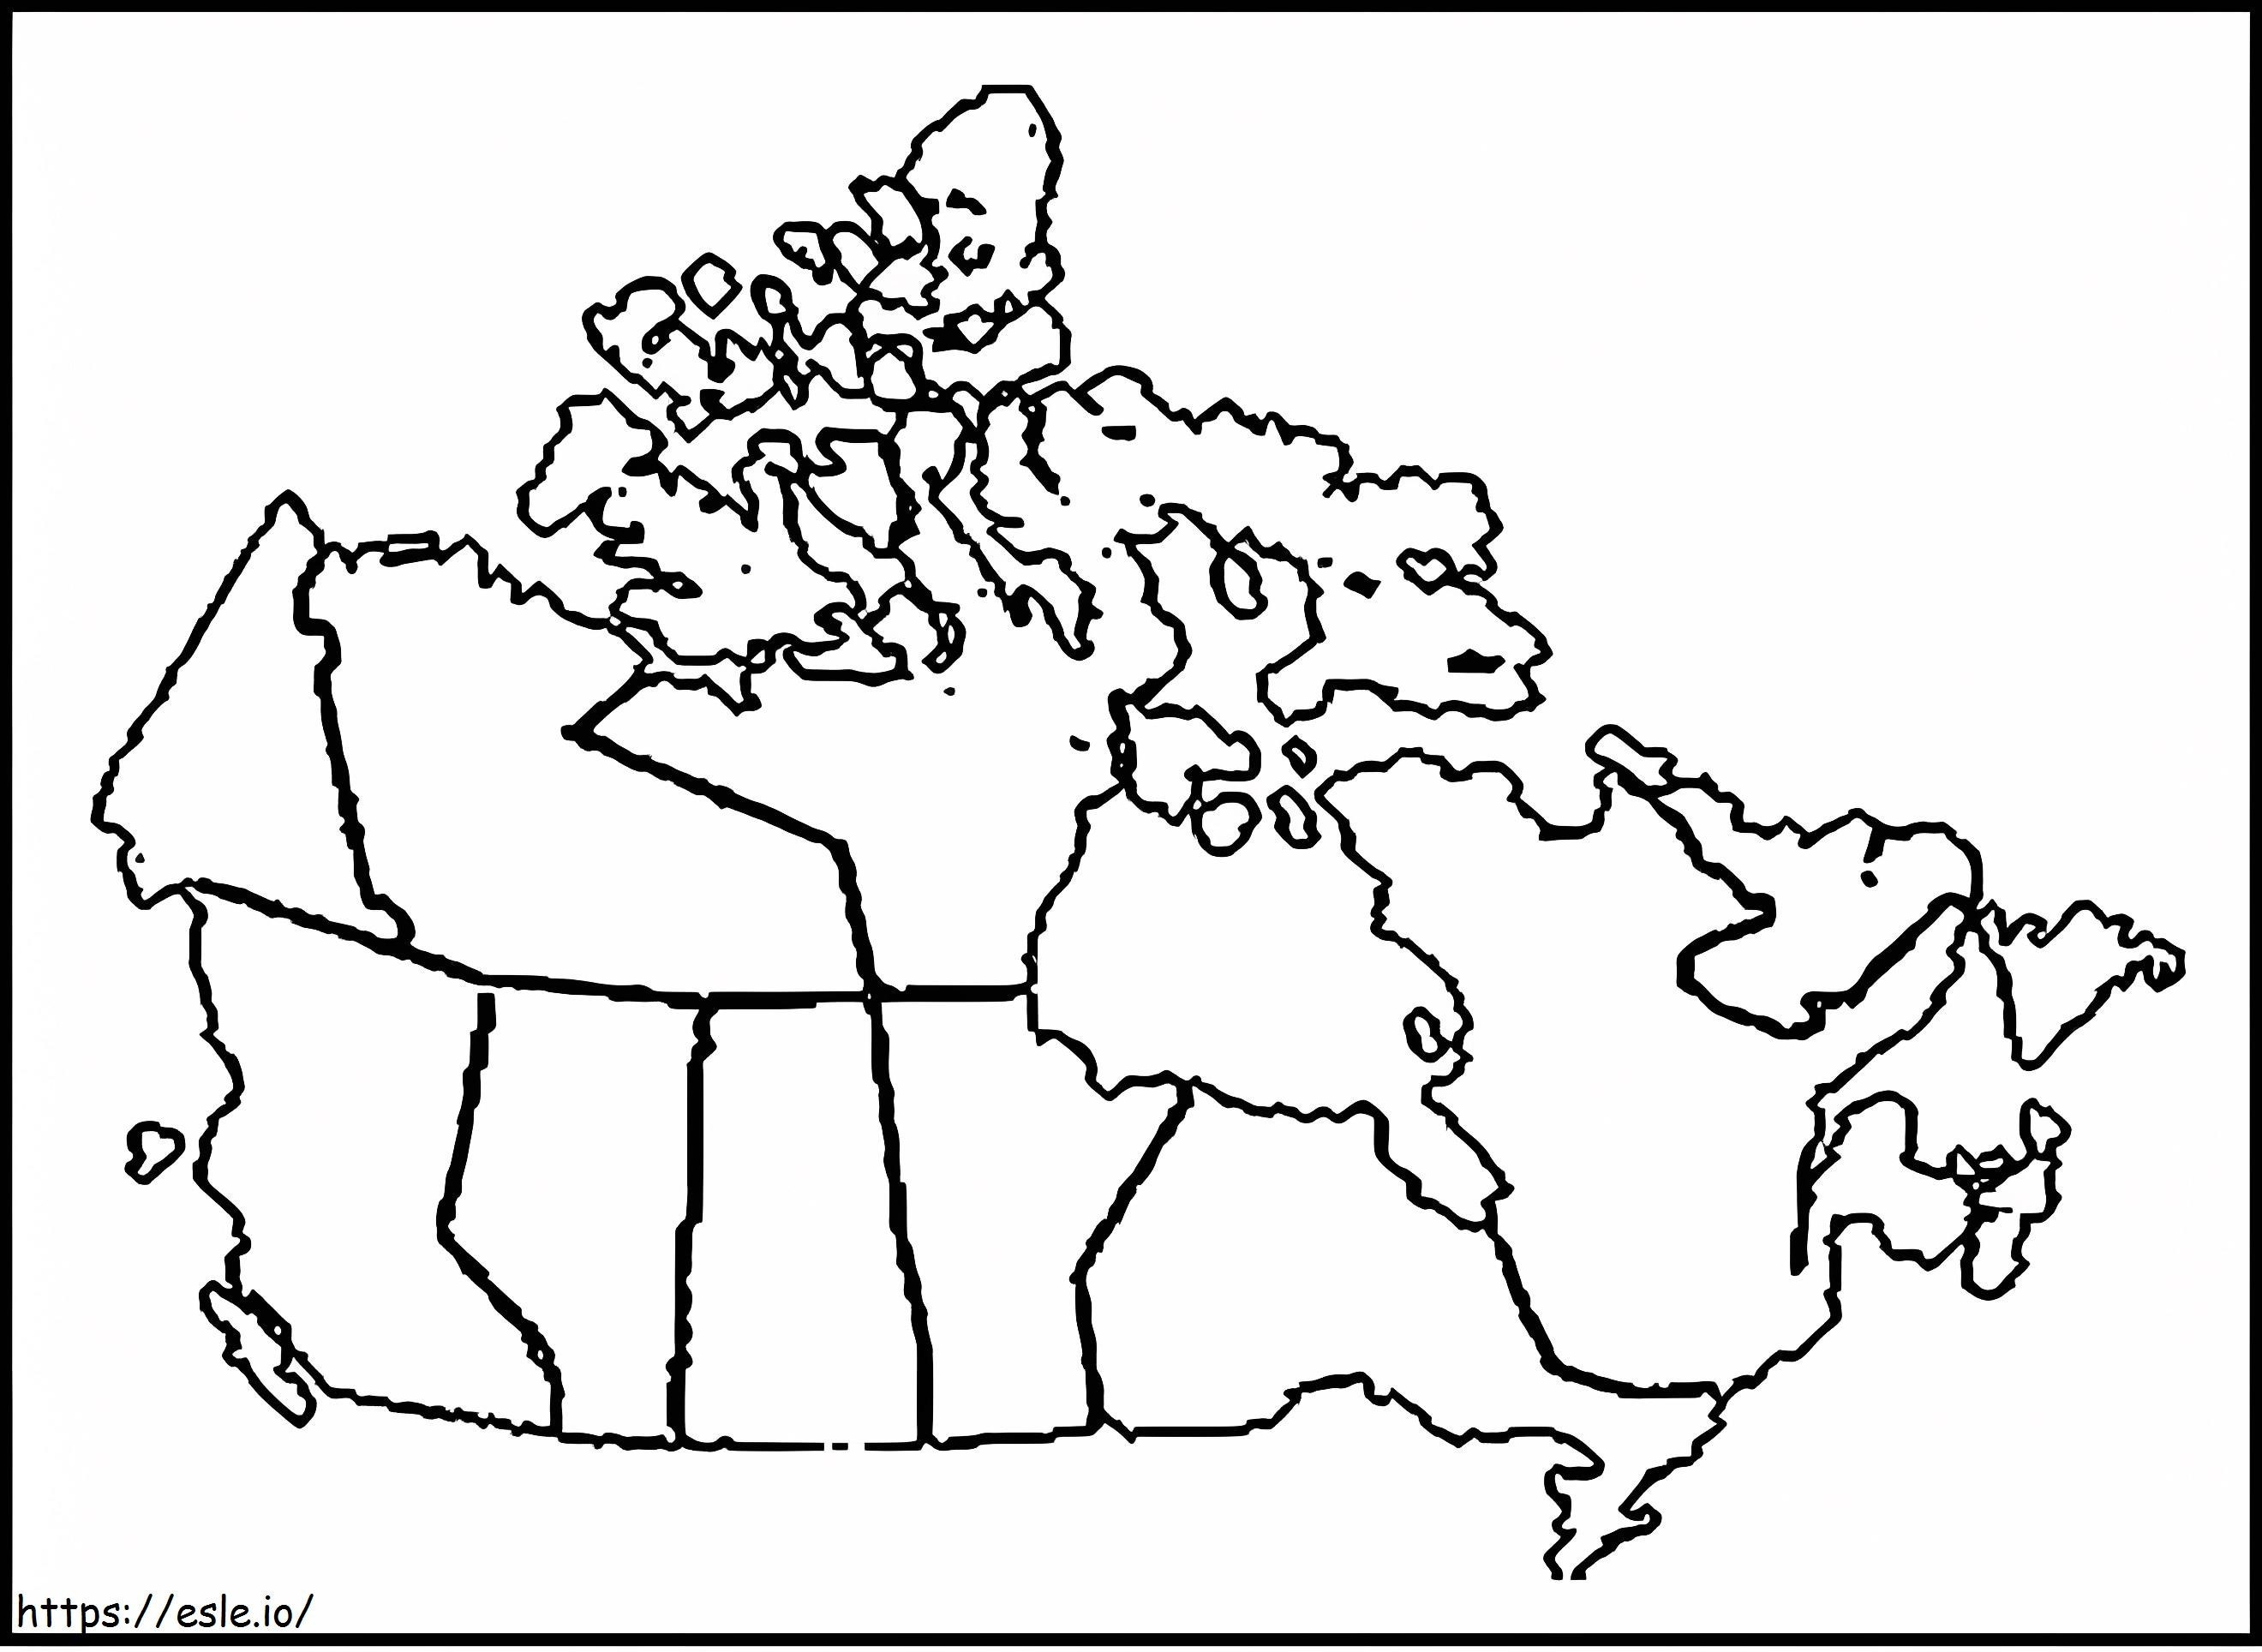 Coloriage Carte du Canada 5 à imprimer dessin